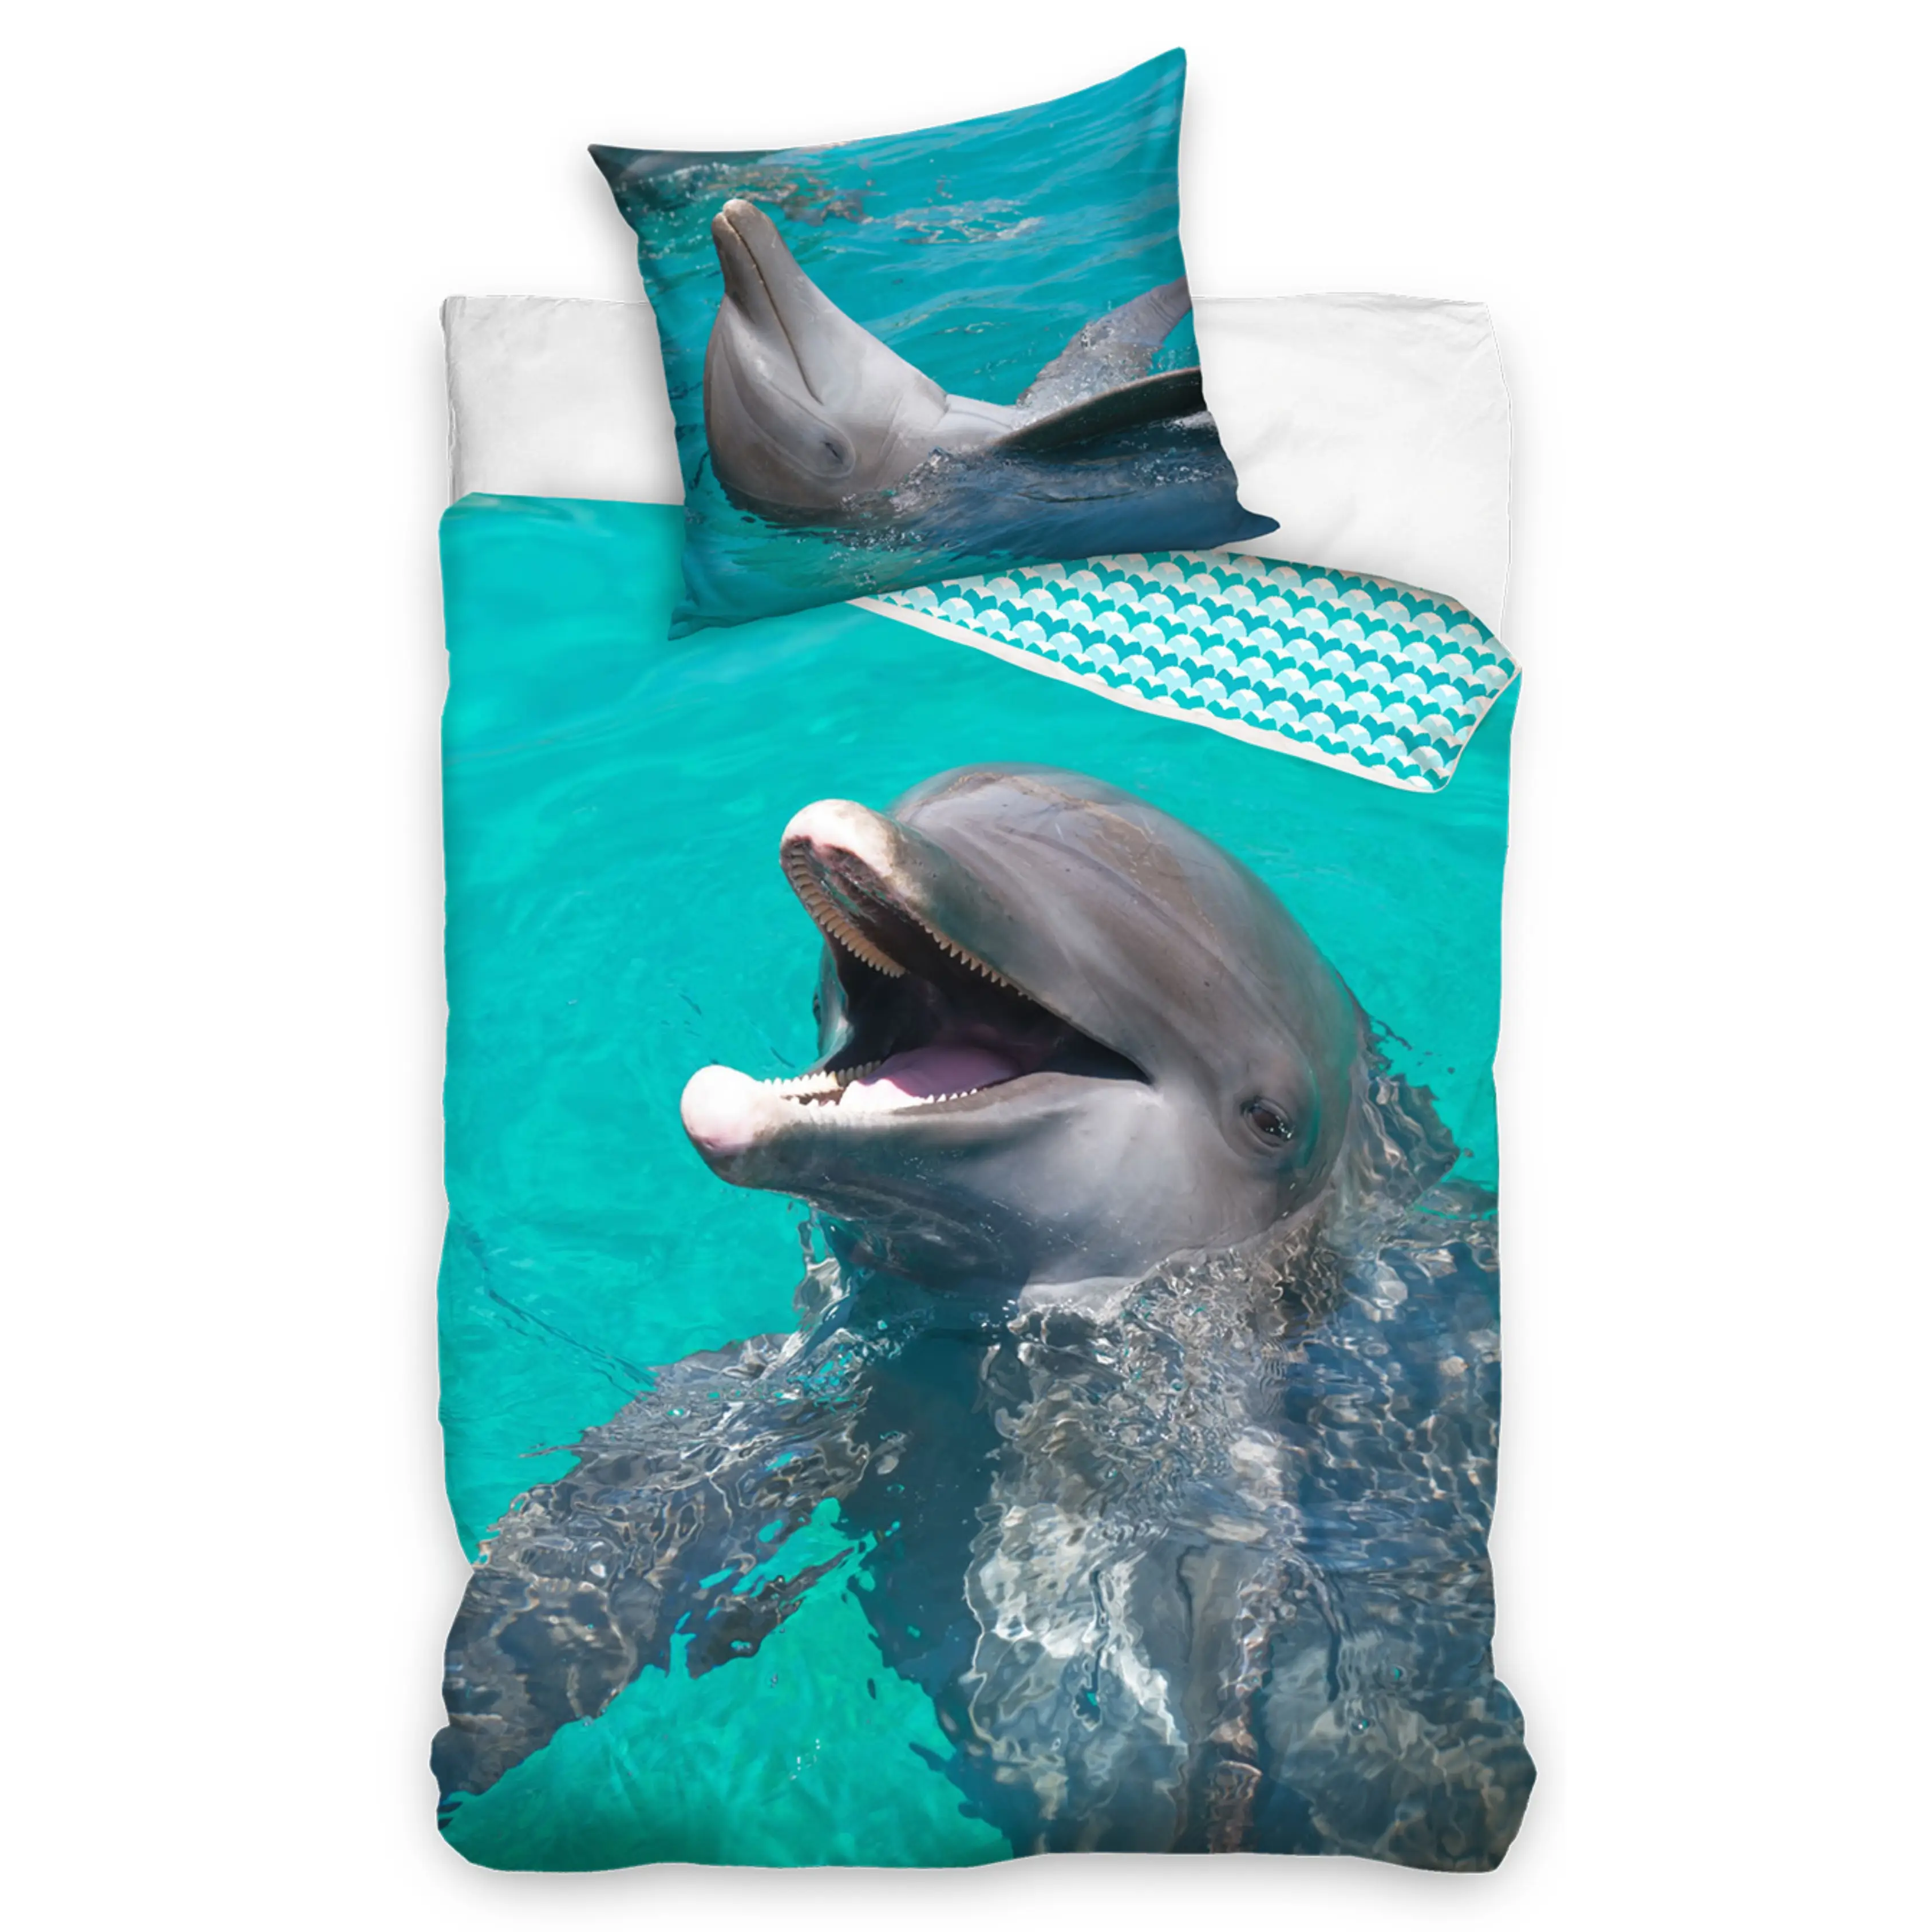 Bettw盲sche Delfin